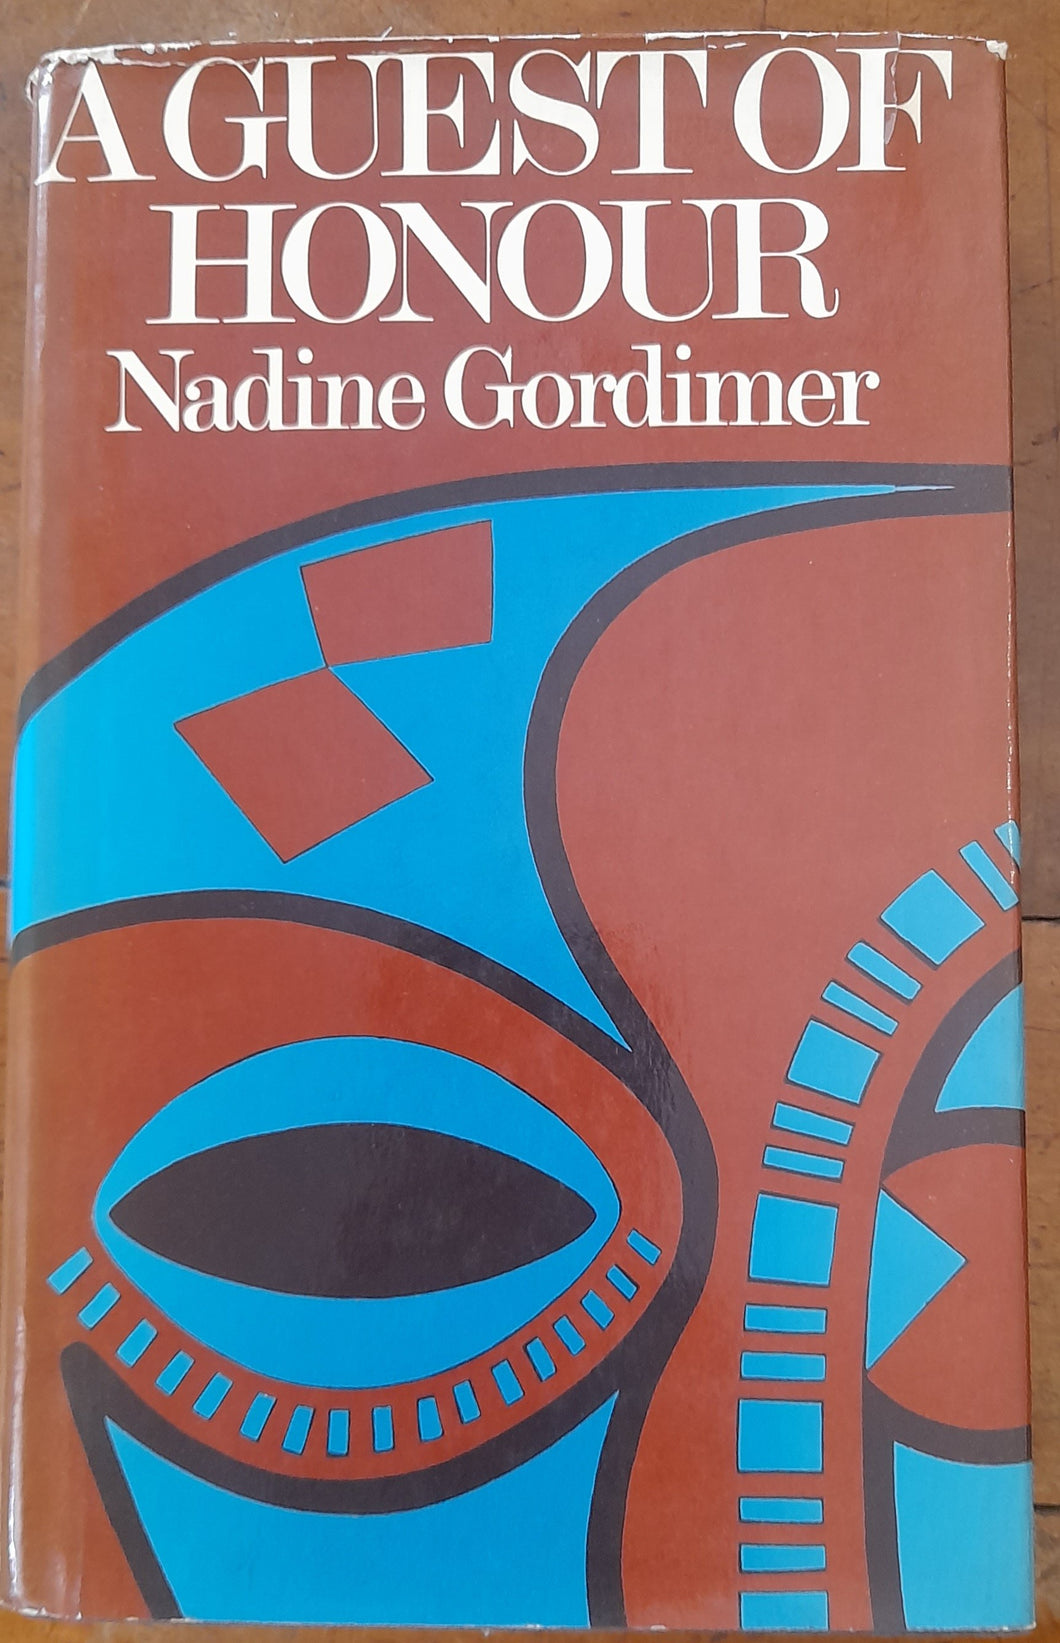 Nadine Gordimer - A Guest of Honour